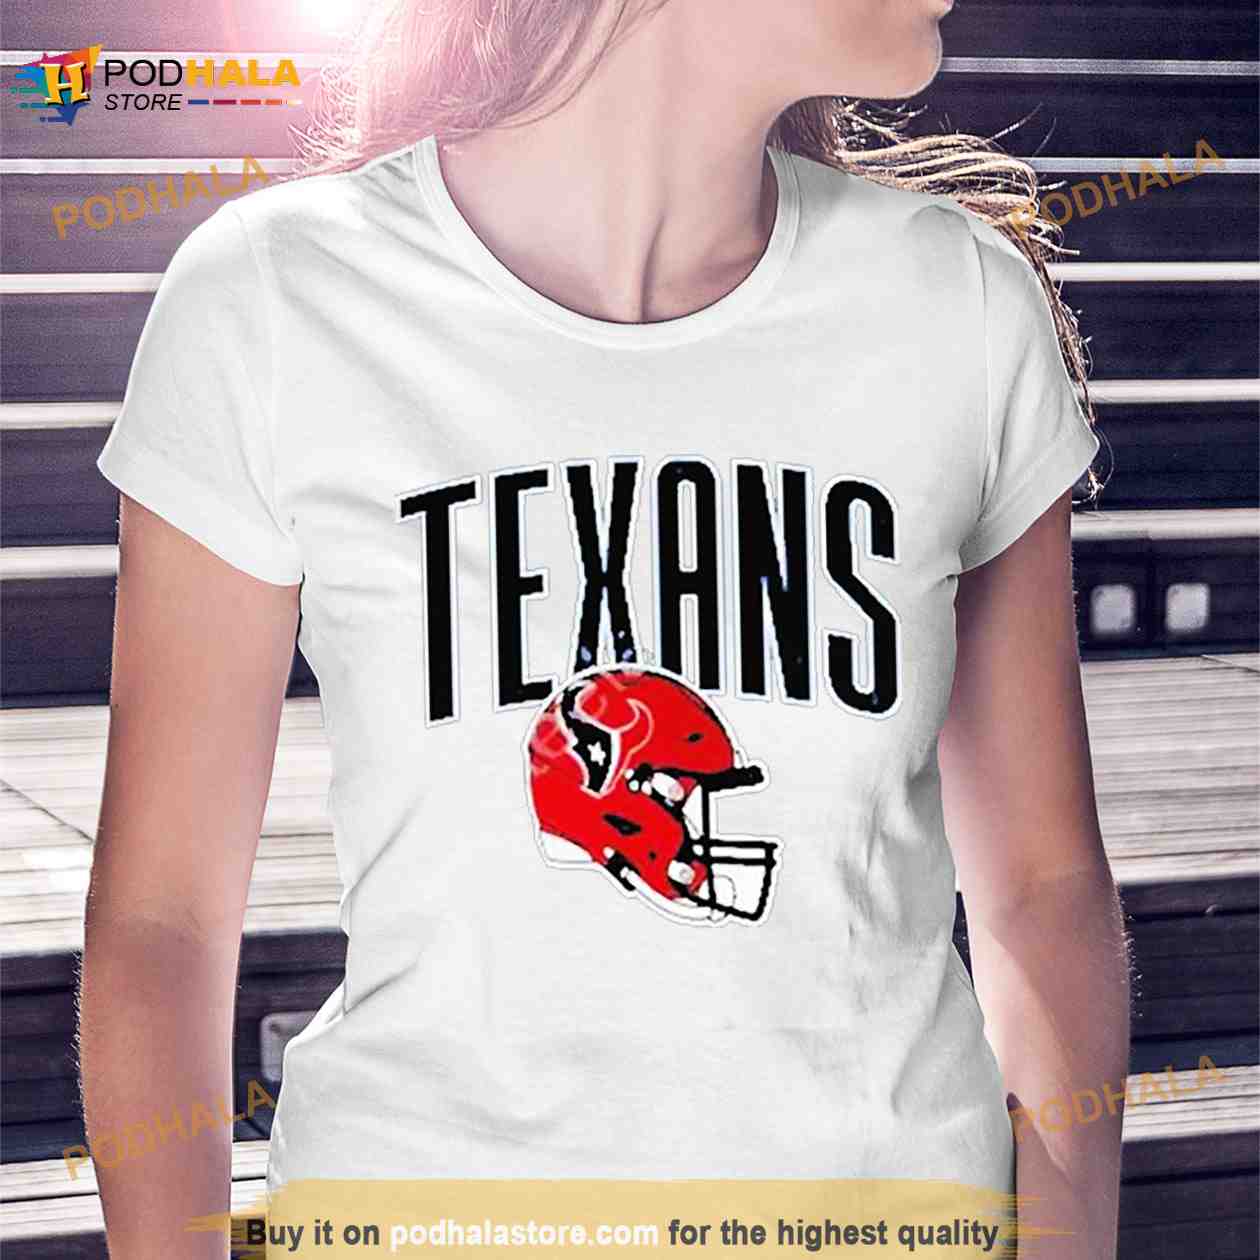 texans shirts for women